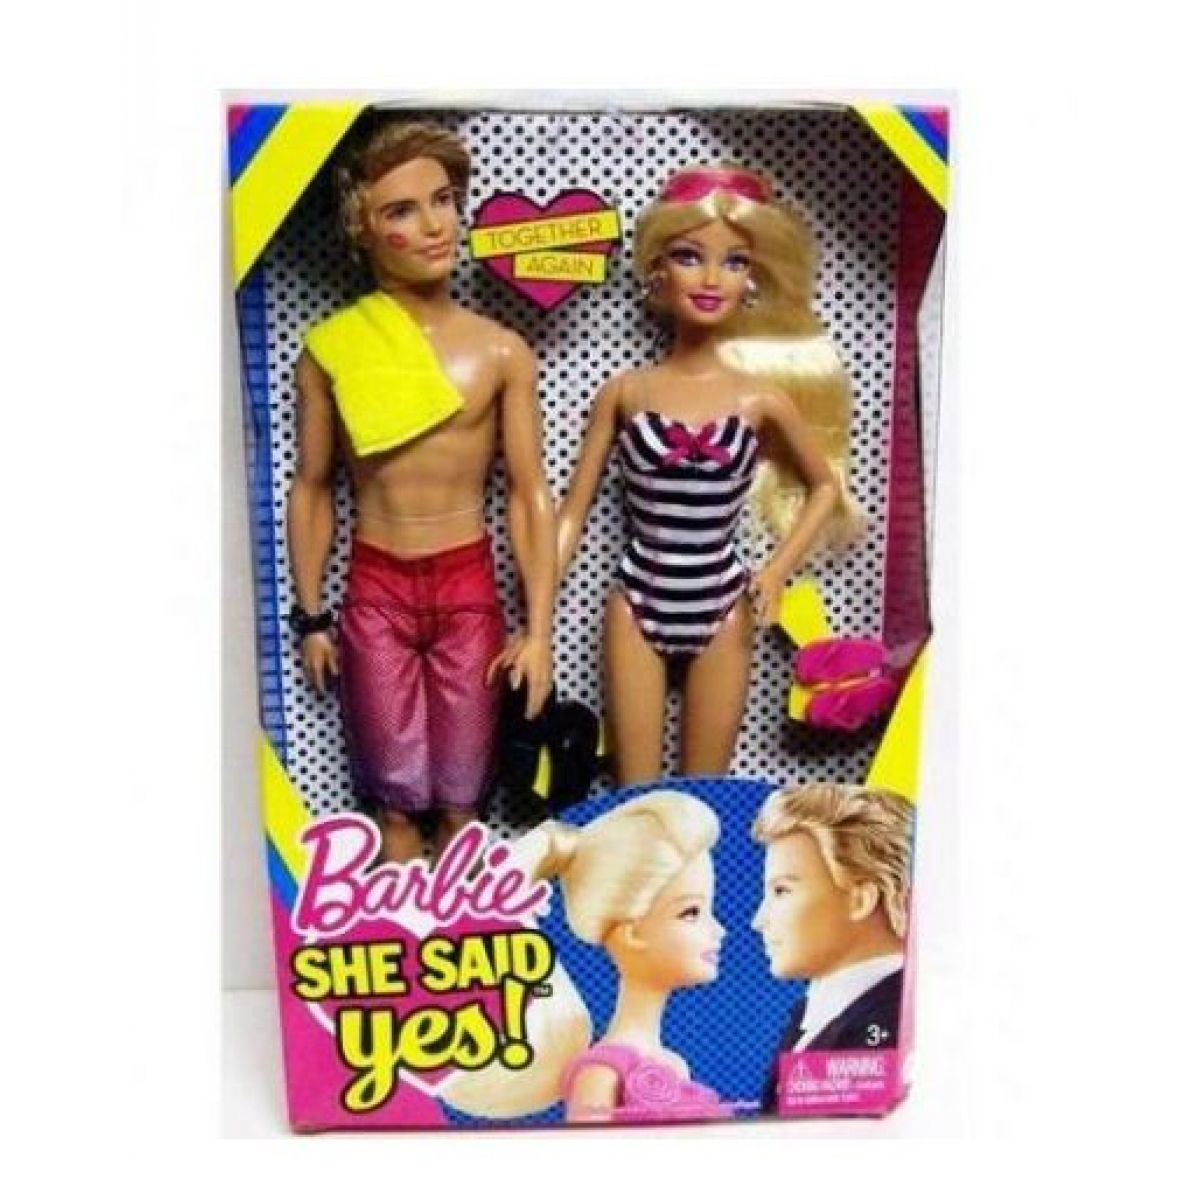 Barbie a Ken dárkový set T7431